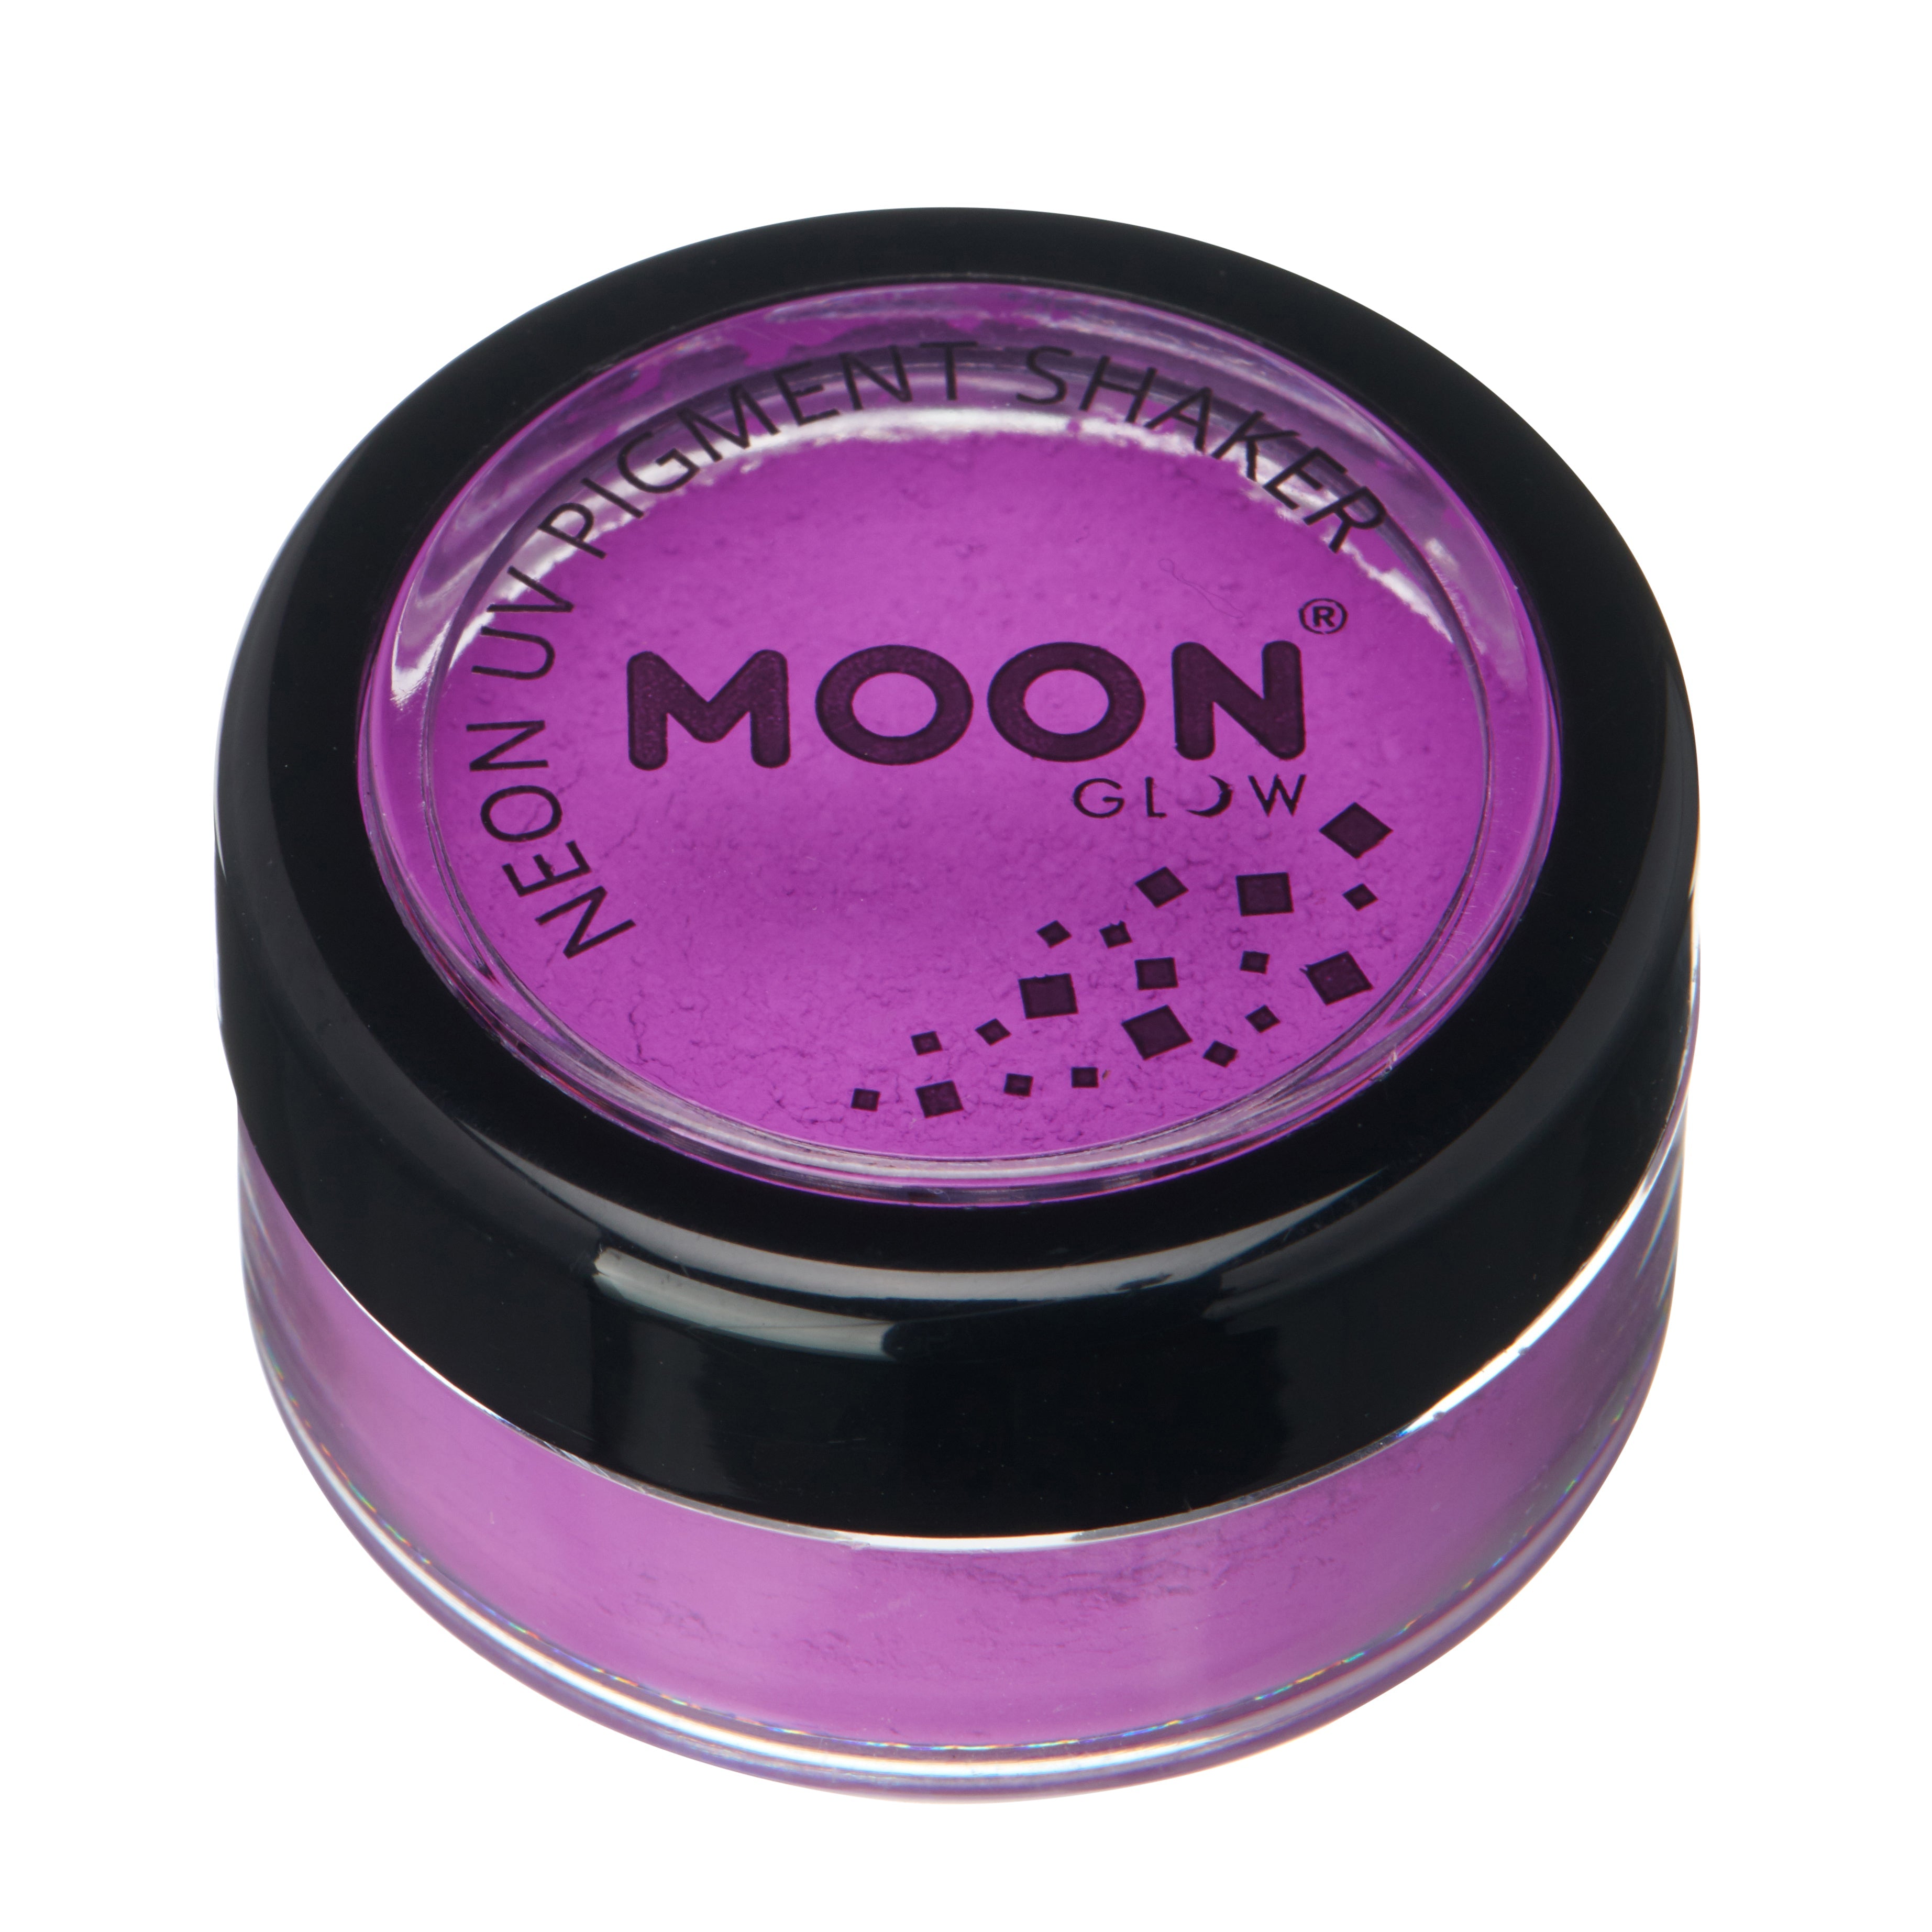 Intense Purple - Neon UV Glow Blacklight Pigment Shaker, 3g. Cosmetically certified, FDA & Health Canada compliant, cruelty free and vegan.